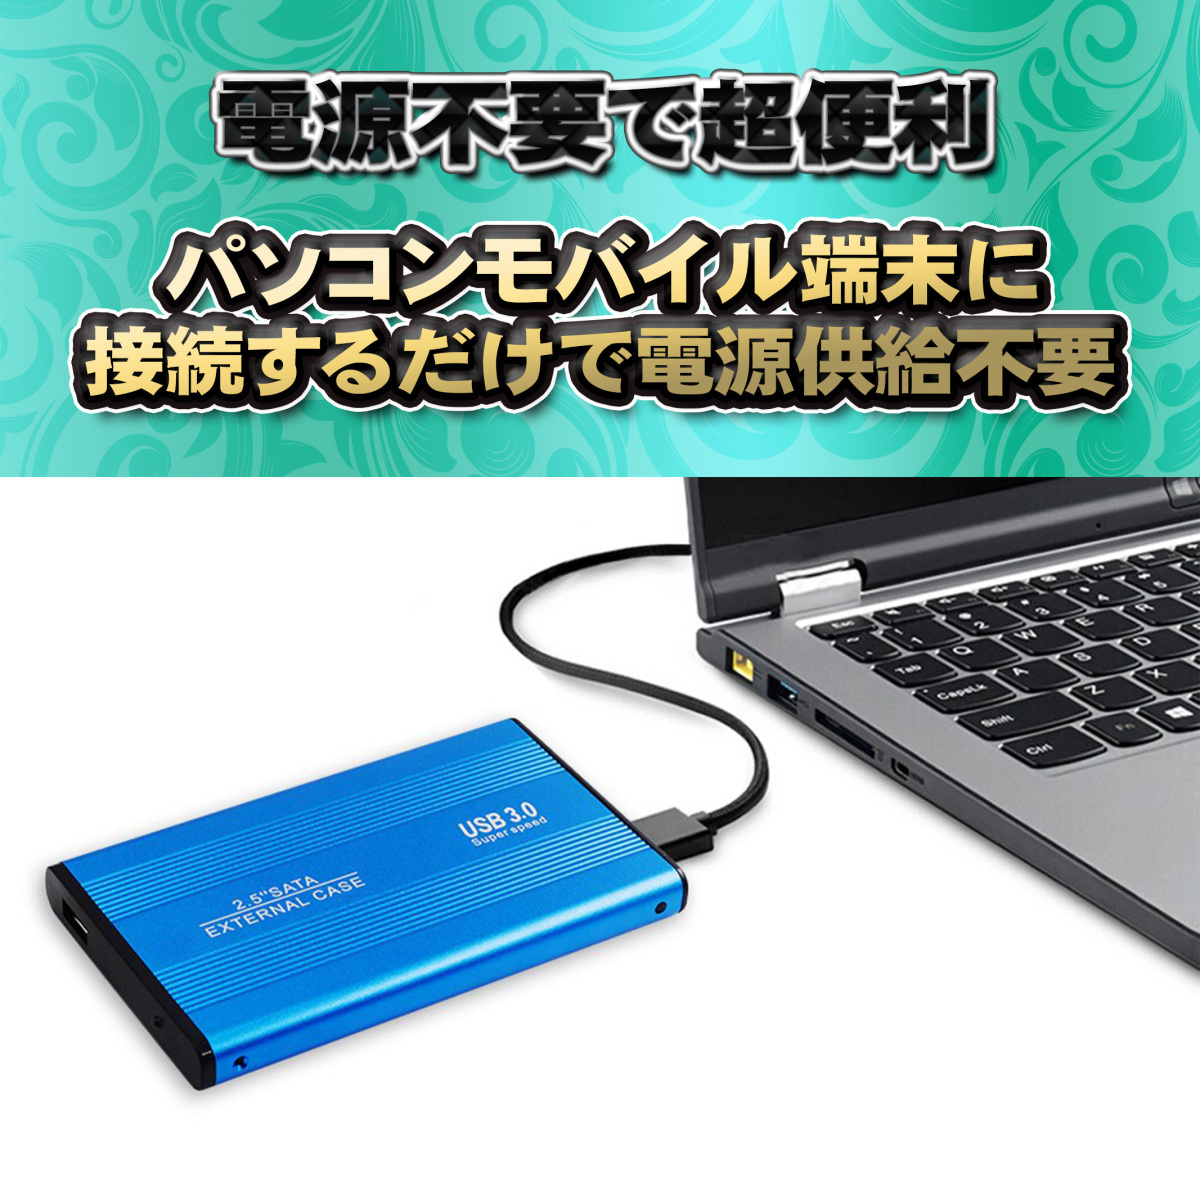 【USB2.0対応】【アルミケース】 2.5インチ HDD SSD ハードディスク 外付け SATA 2.0 USB 接続 【ブラック】_画像6